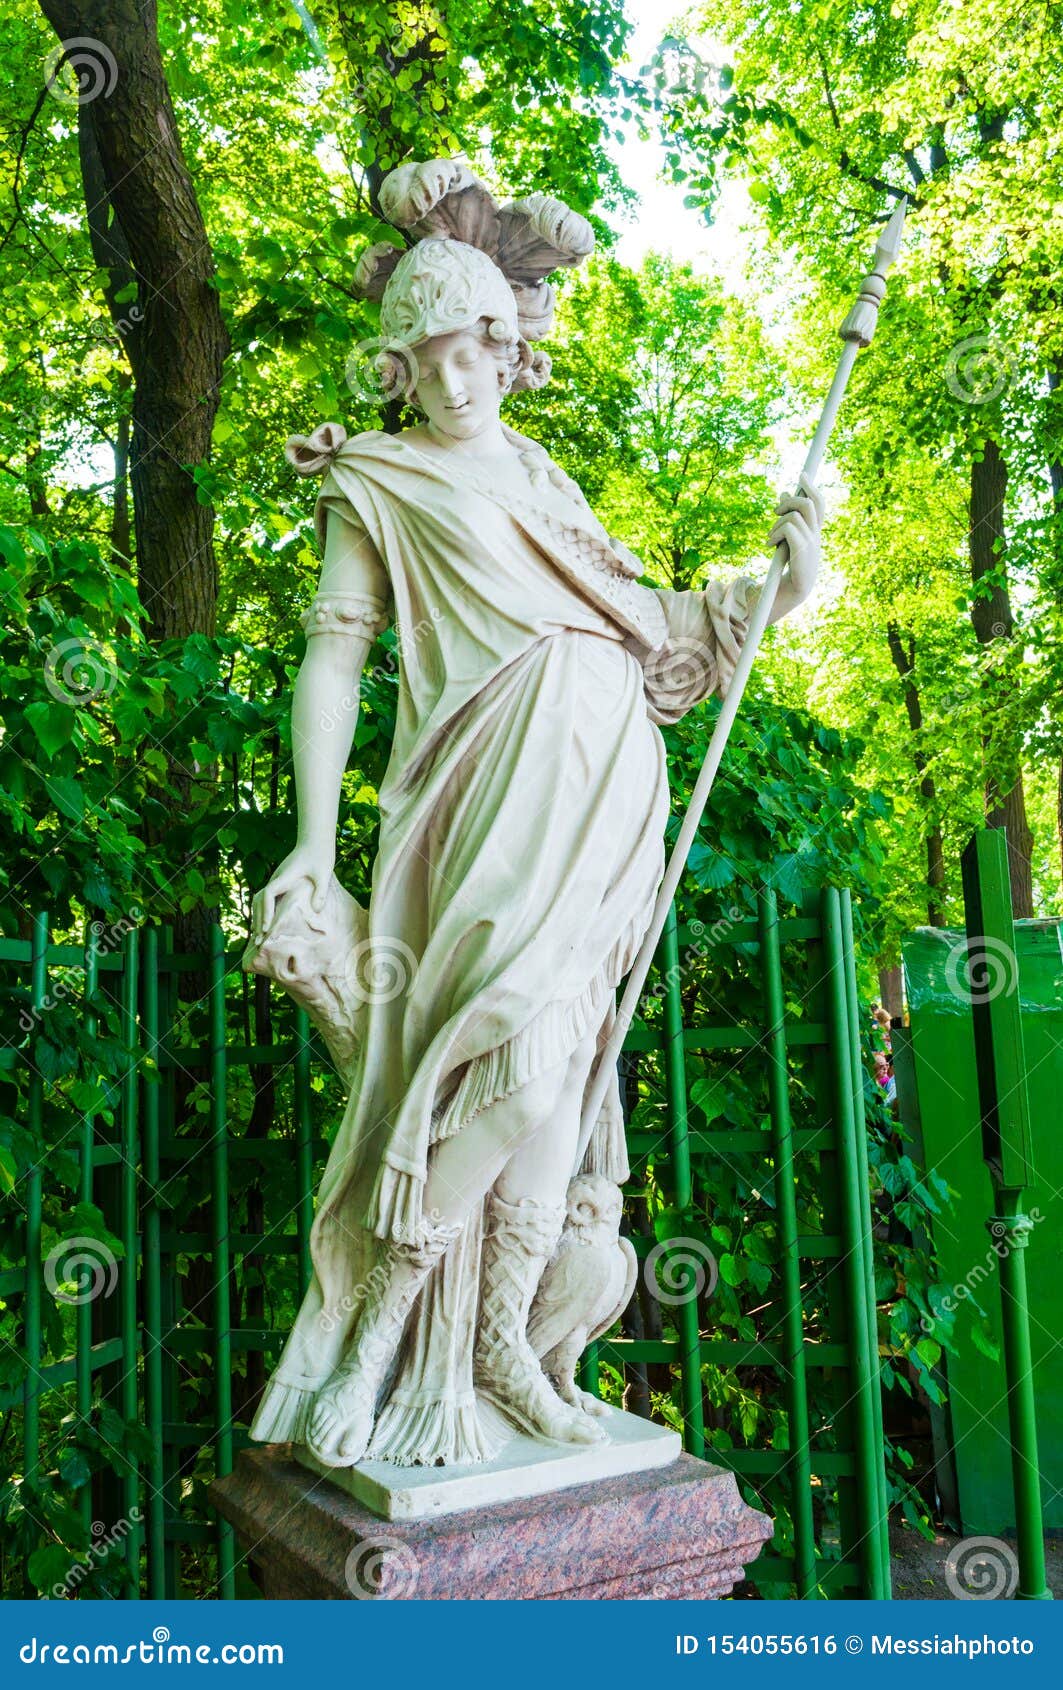 Summer Garden In St Petersburg Russia The Goddess Minerva